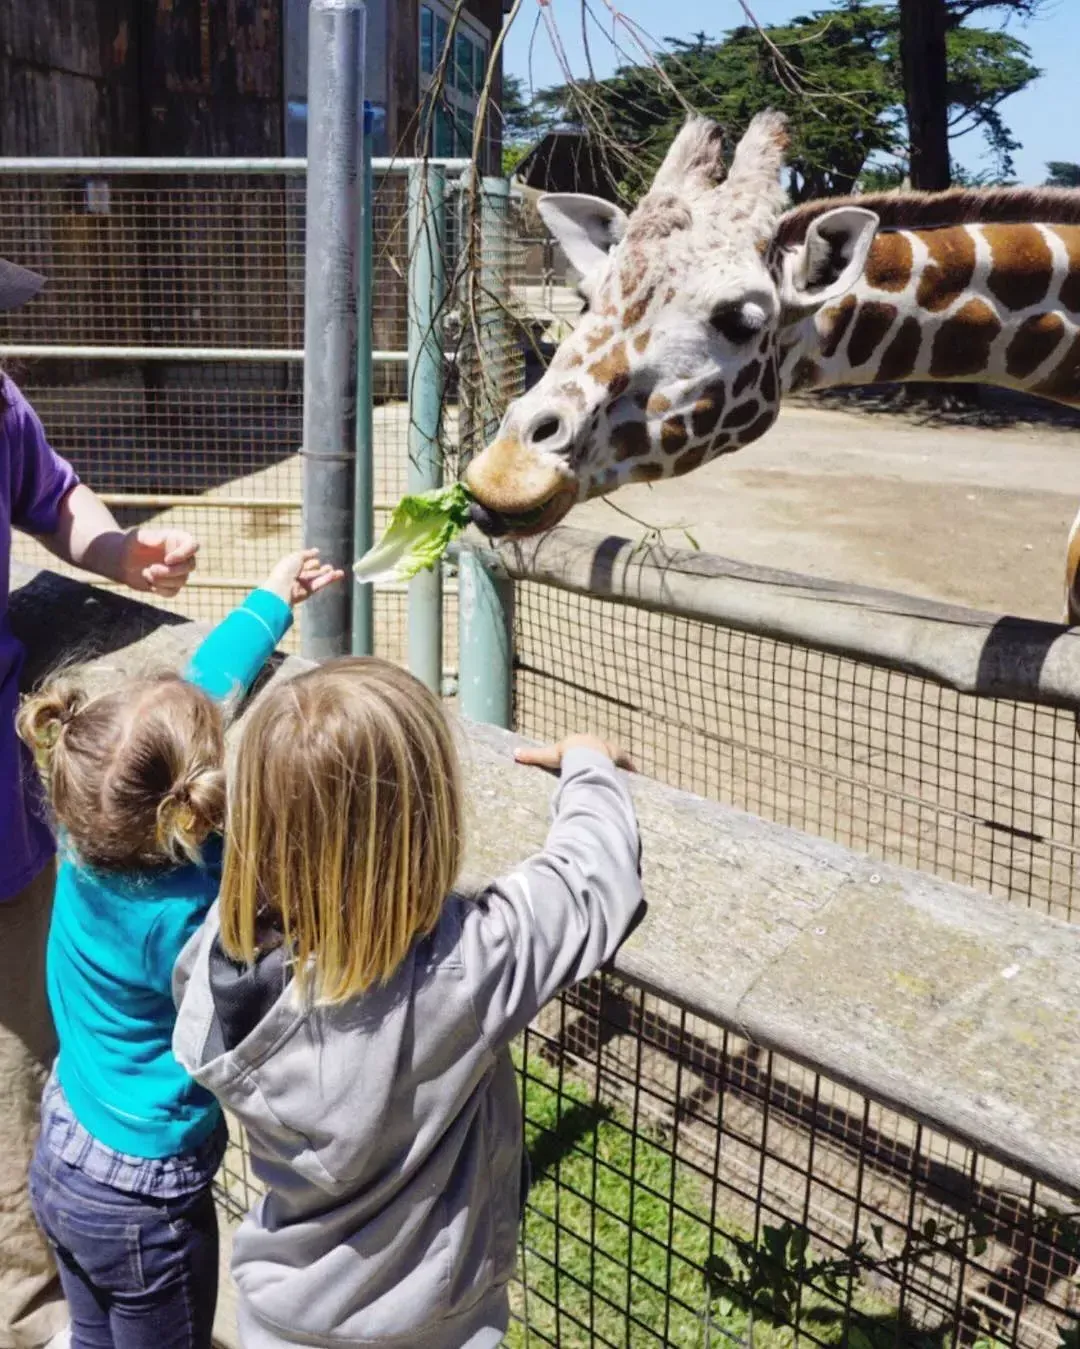 Children feed a giraffe at the 贝博体彩app动物园.